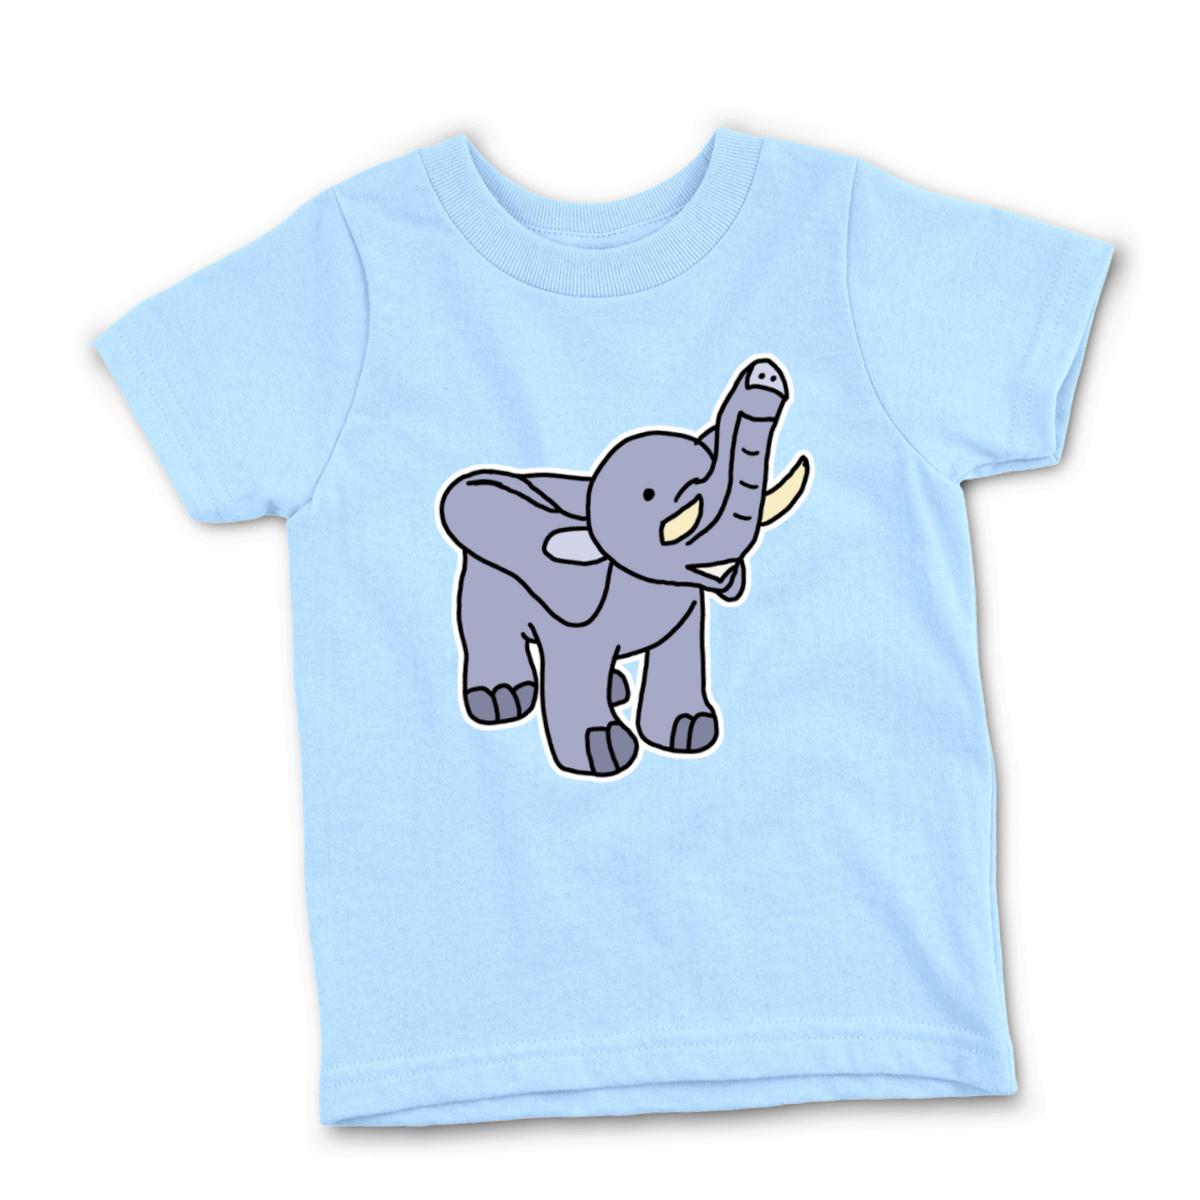 Toy Elephant Kid's Tee Small light-blue